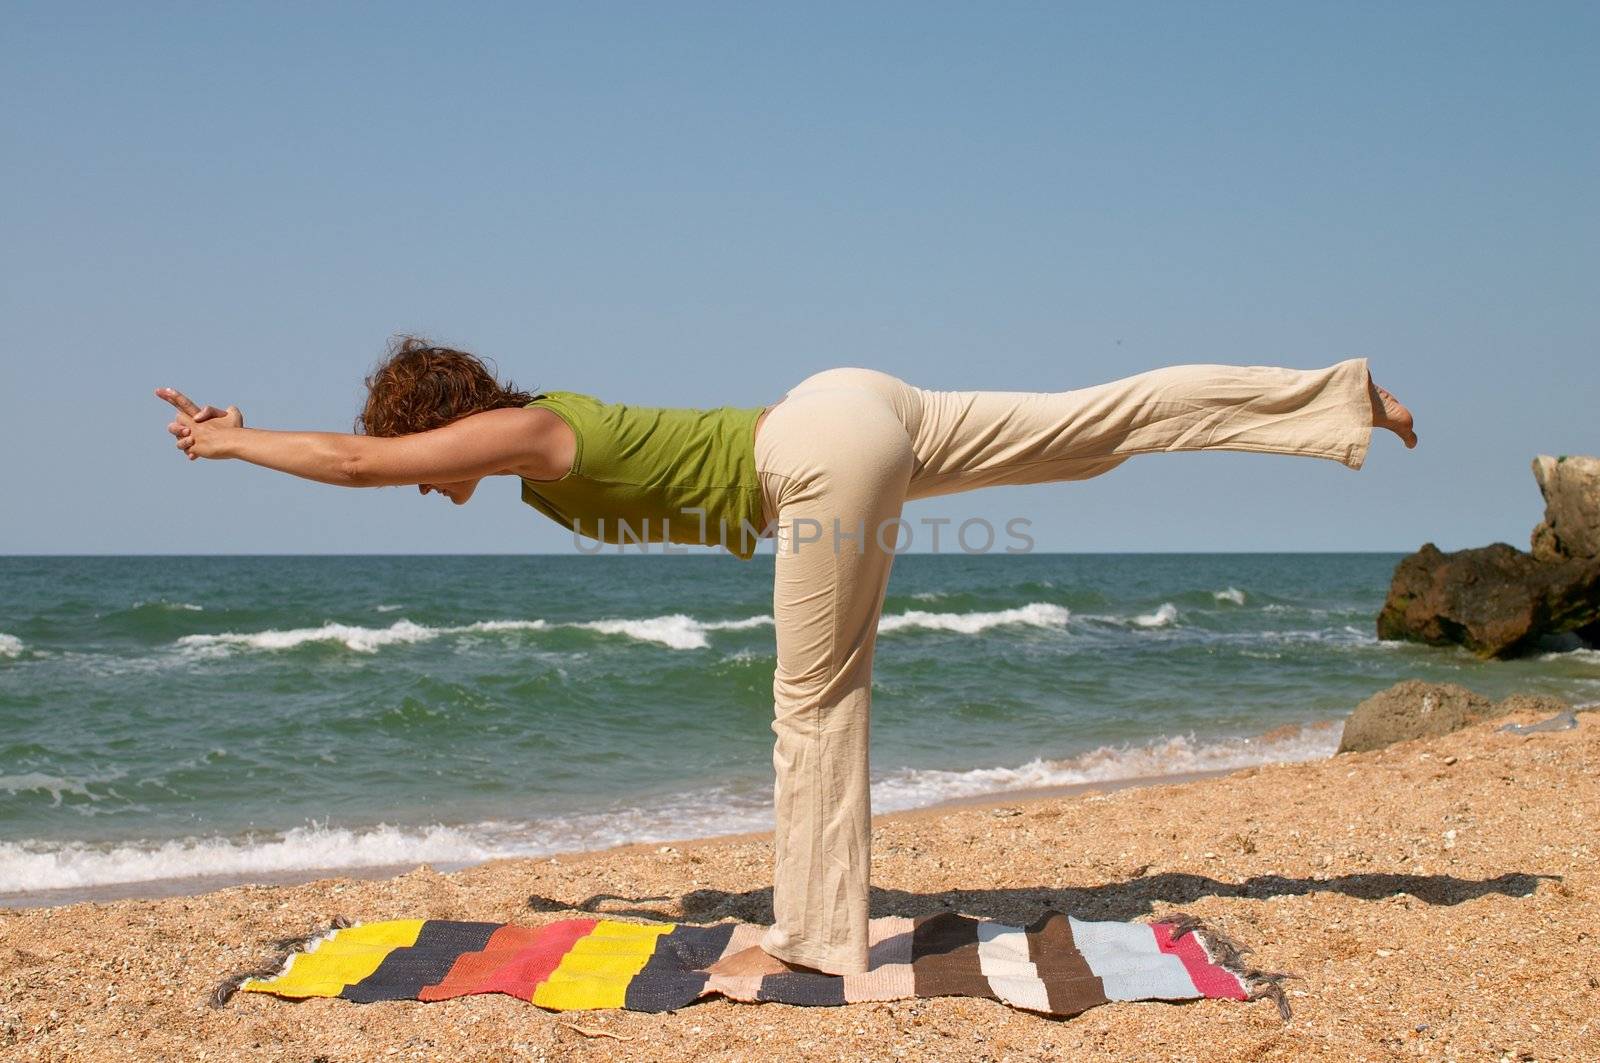 virabhadrasana yoga pose by Ukrainian